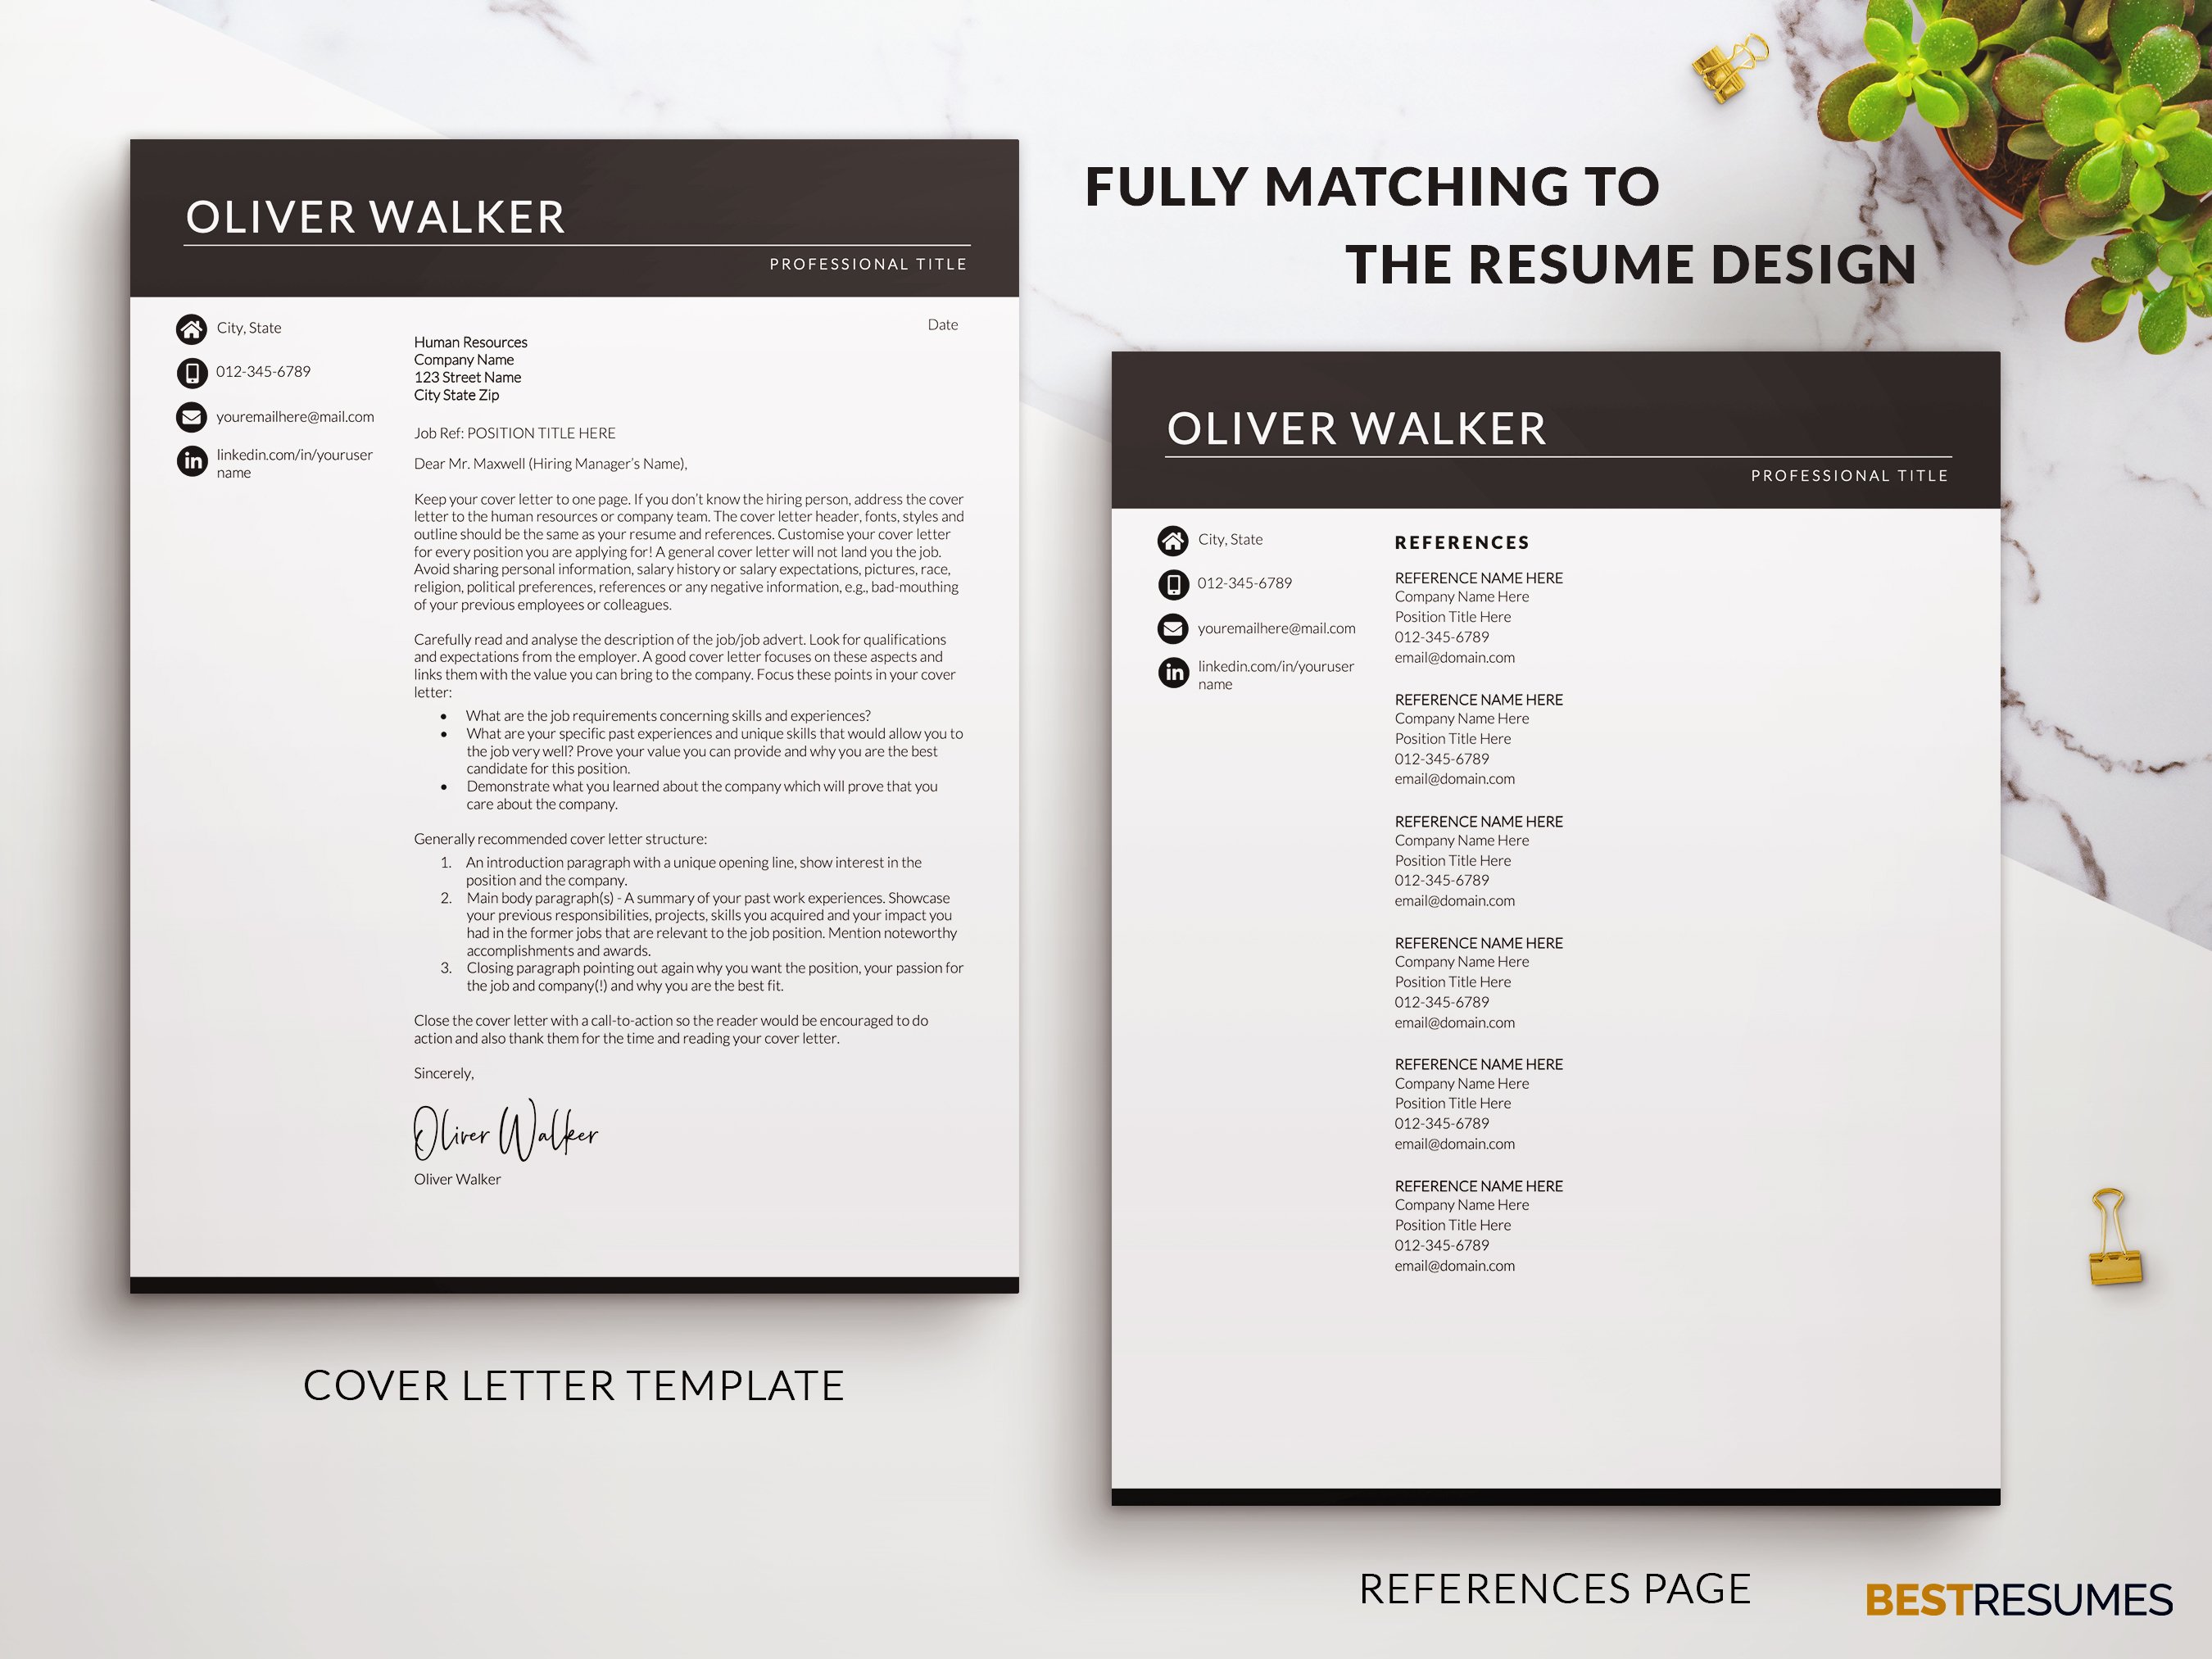 marketing manager cv resume template cover letter references walker.jpg 486